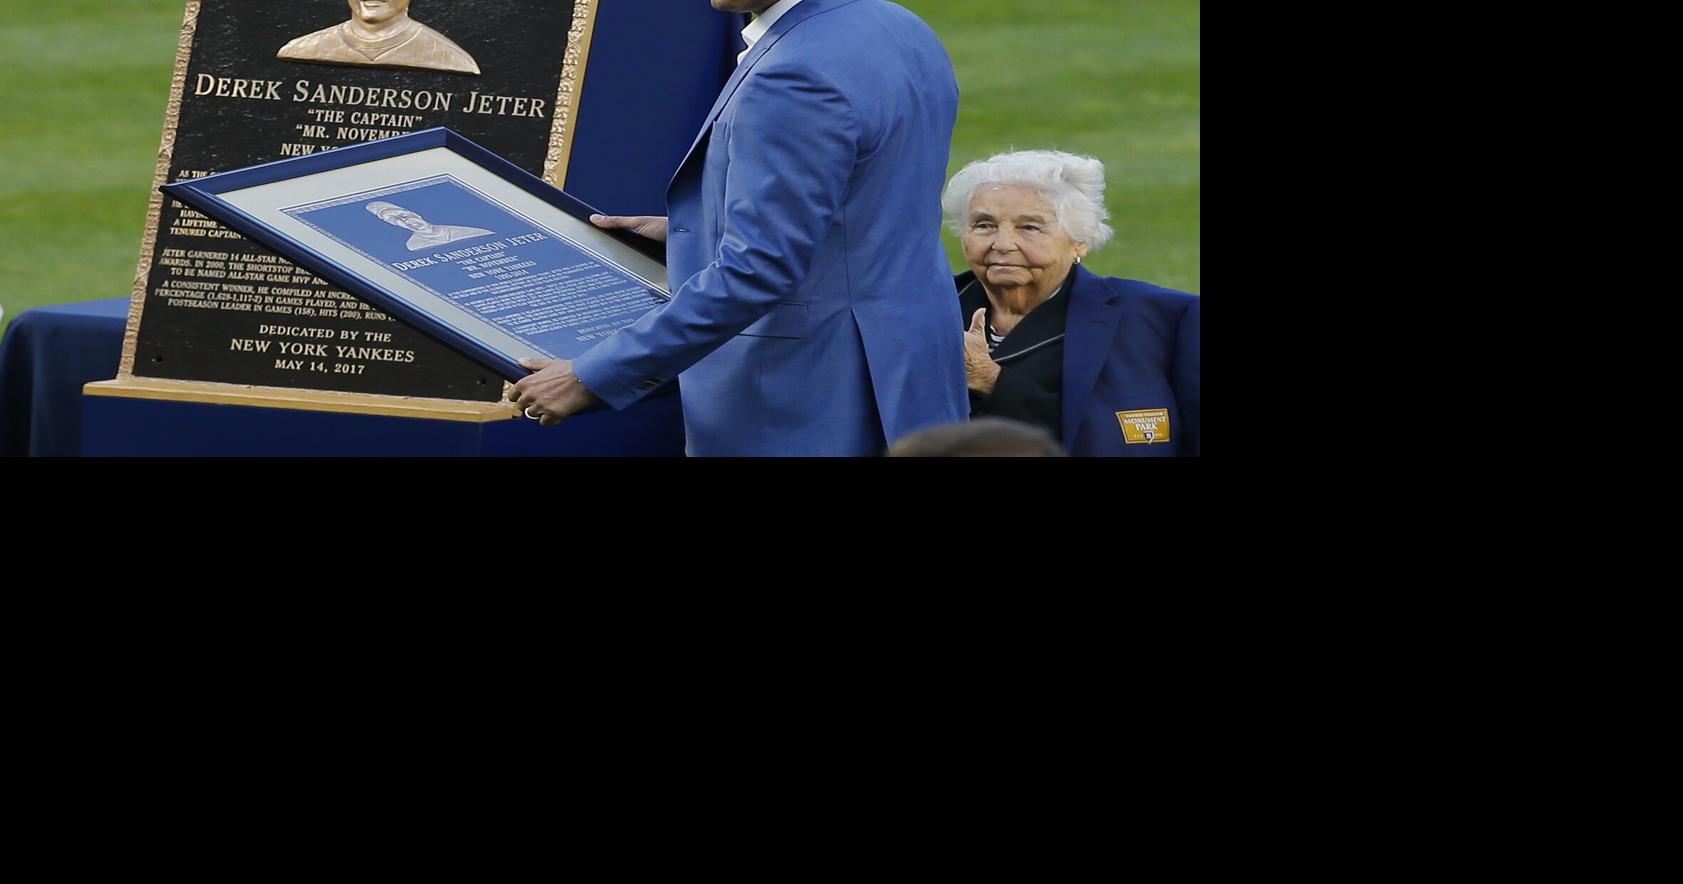 Derek Jeter, Larry Walker Are Elected Into Baseball's Hall of Fame - WSJ